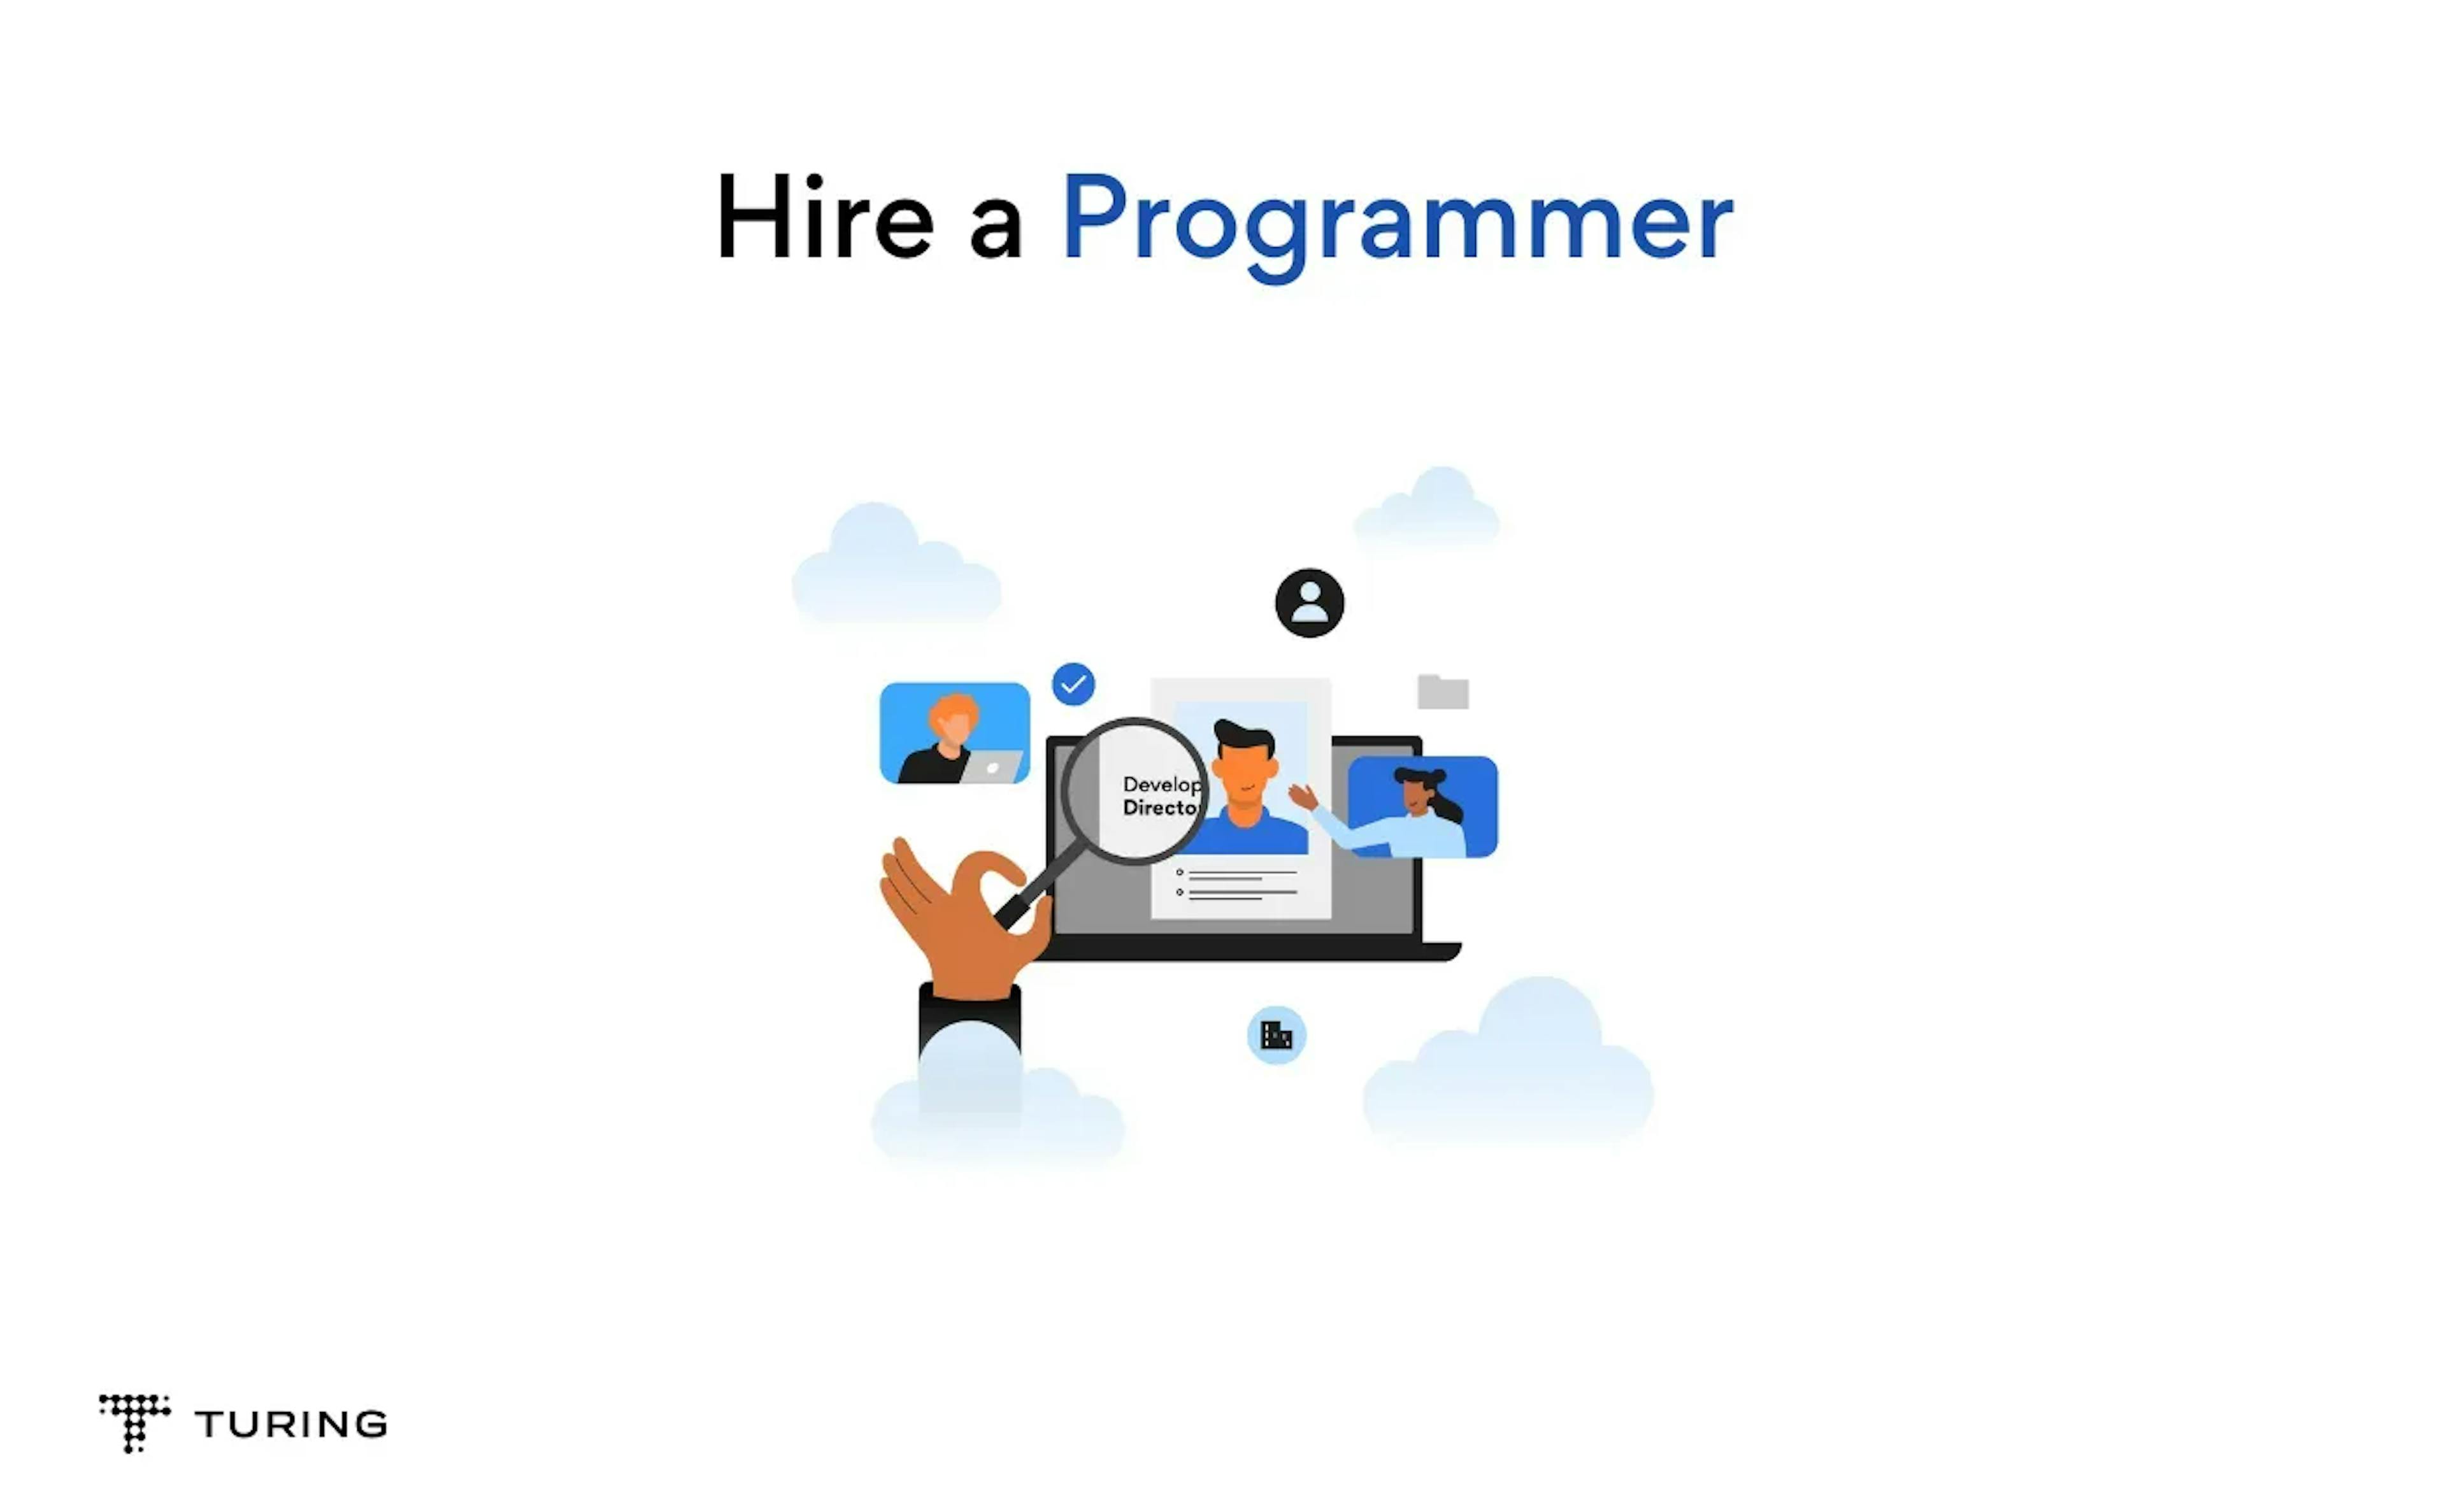 Hire a Programmer